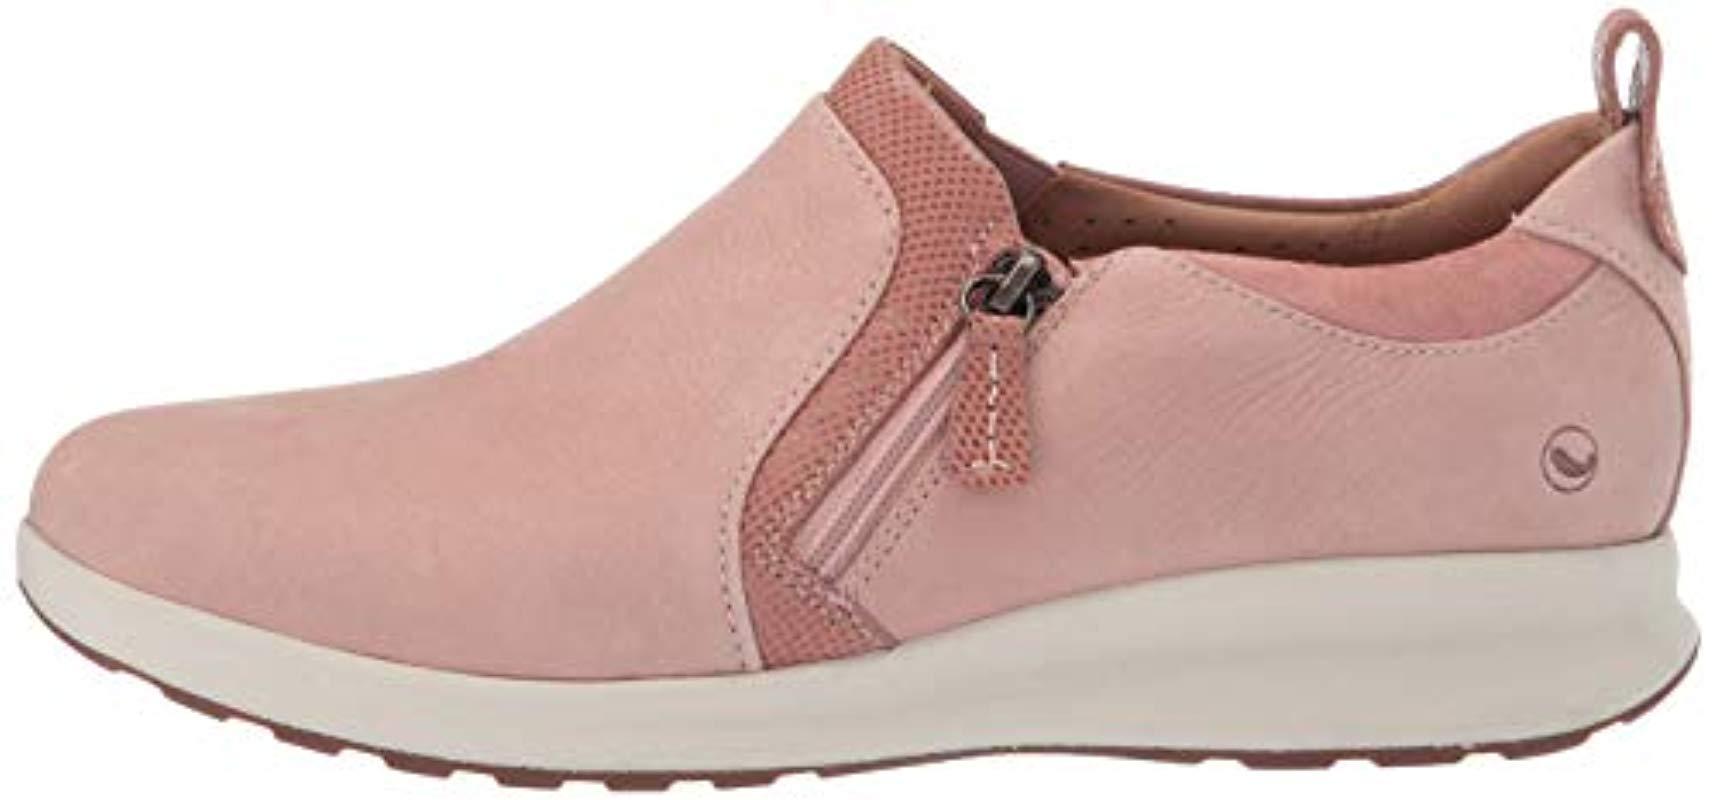 Clarks Un Adorn Zip Sneaker in Pink - Save 63% | Lyst